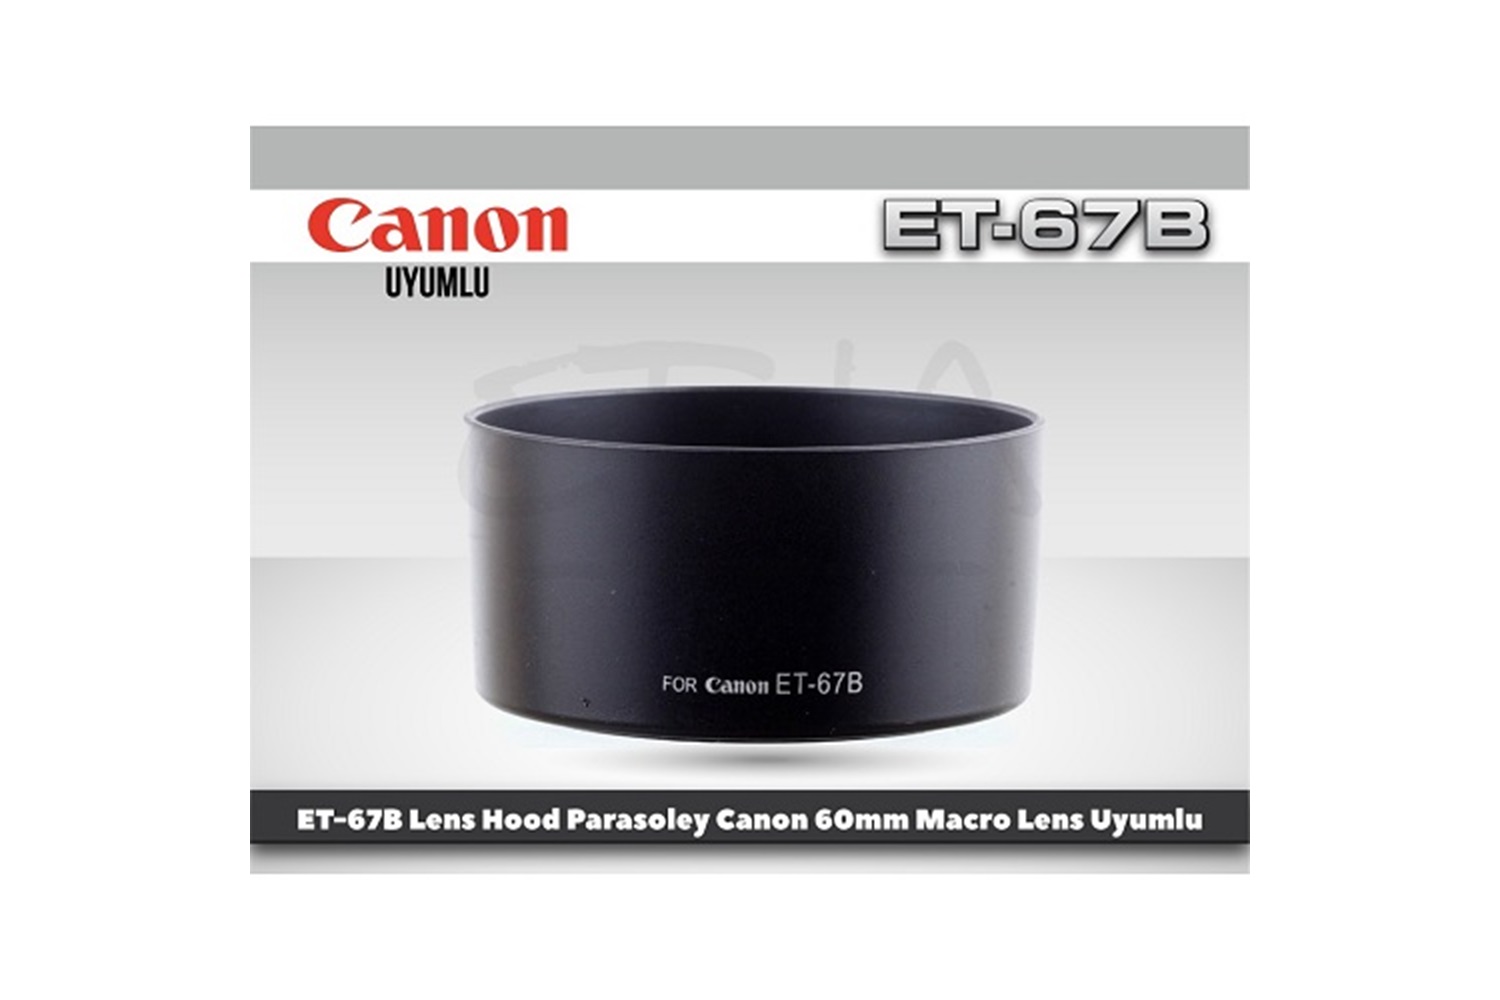 Tewise Canon ET-67B Parasoley 60mm F2.8 USM Makro Lens Uyumlu